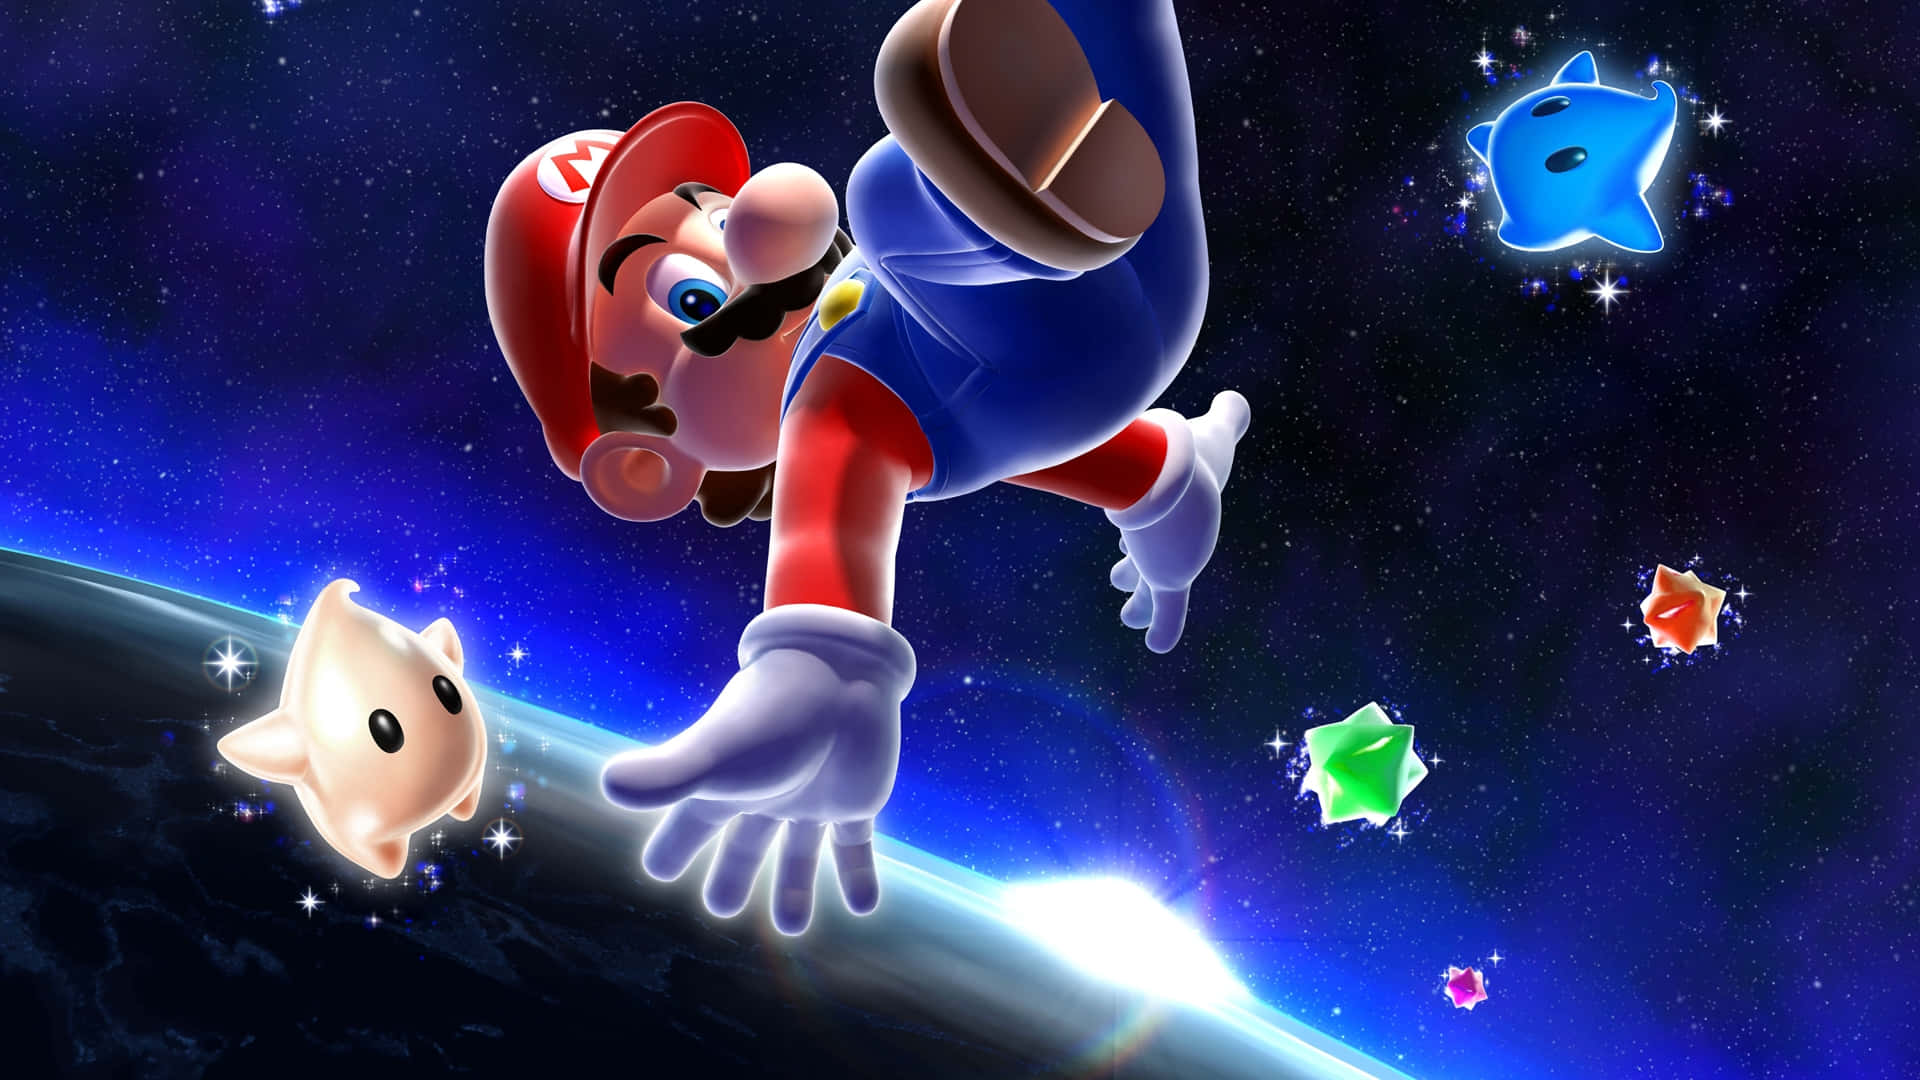 Explore our universe as Mario with 'Super Mario Galaxy' Wallpaper